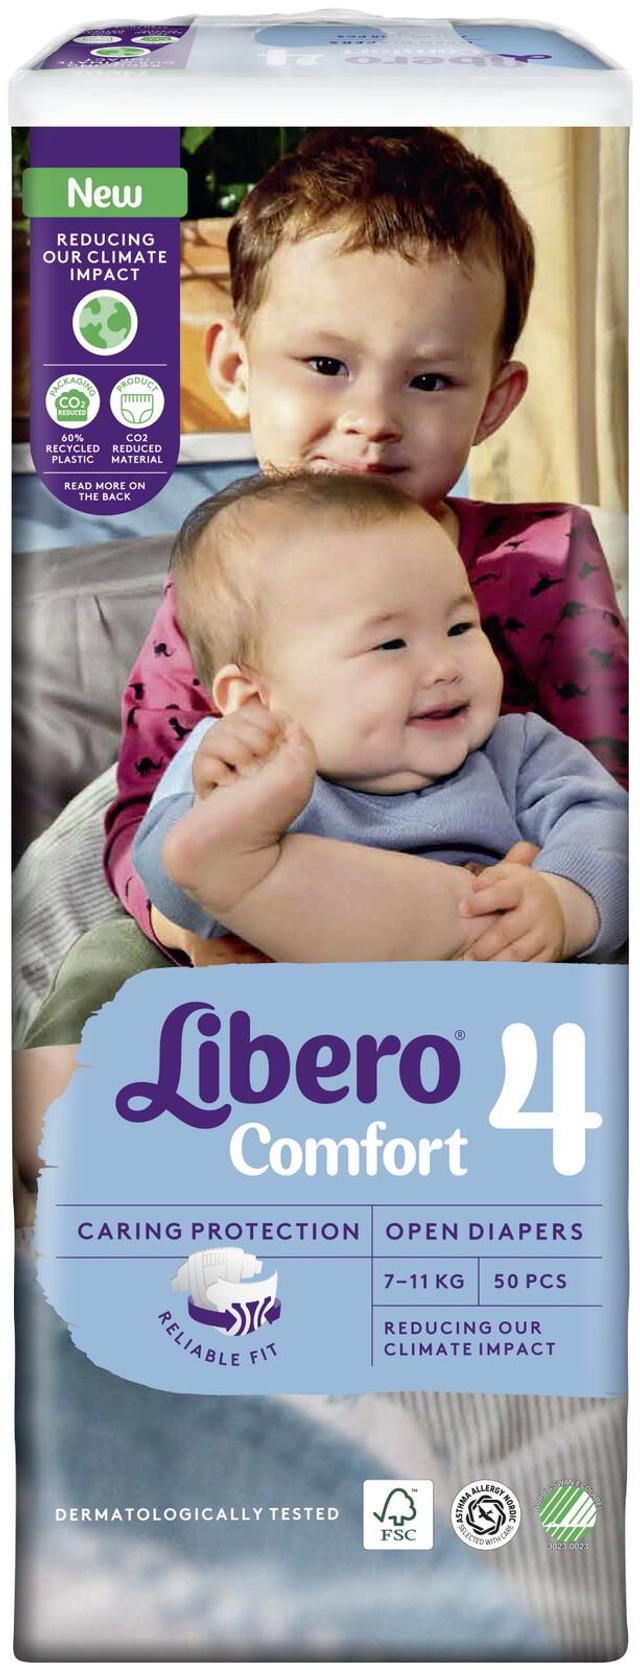 LIBERO Comfort tejpblöja storlek 4, 50 st, 7-11kg